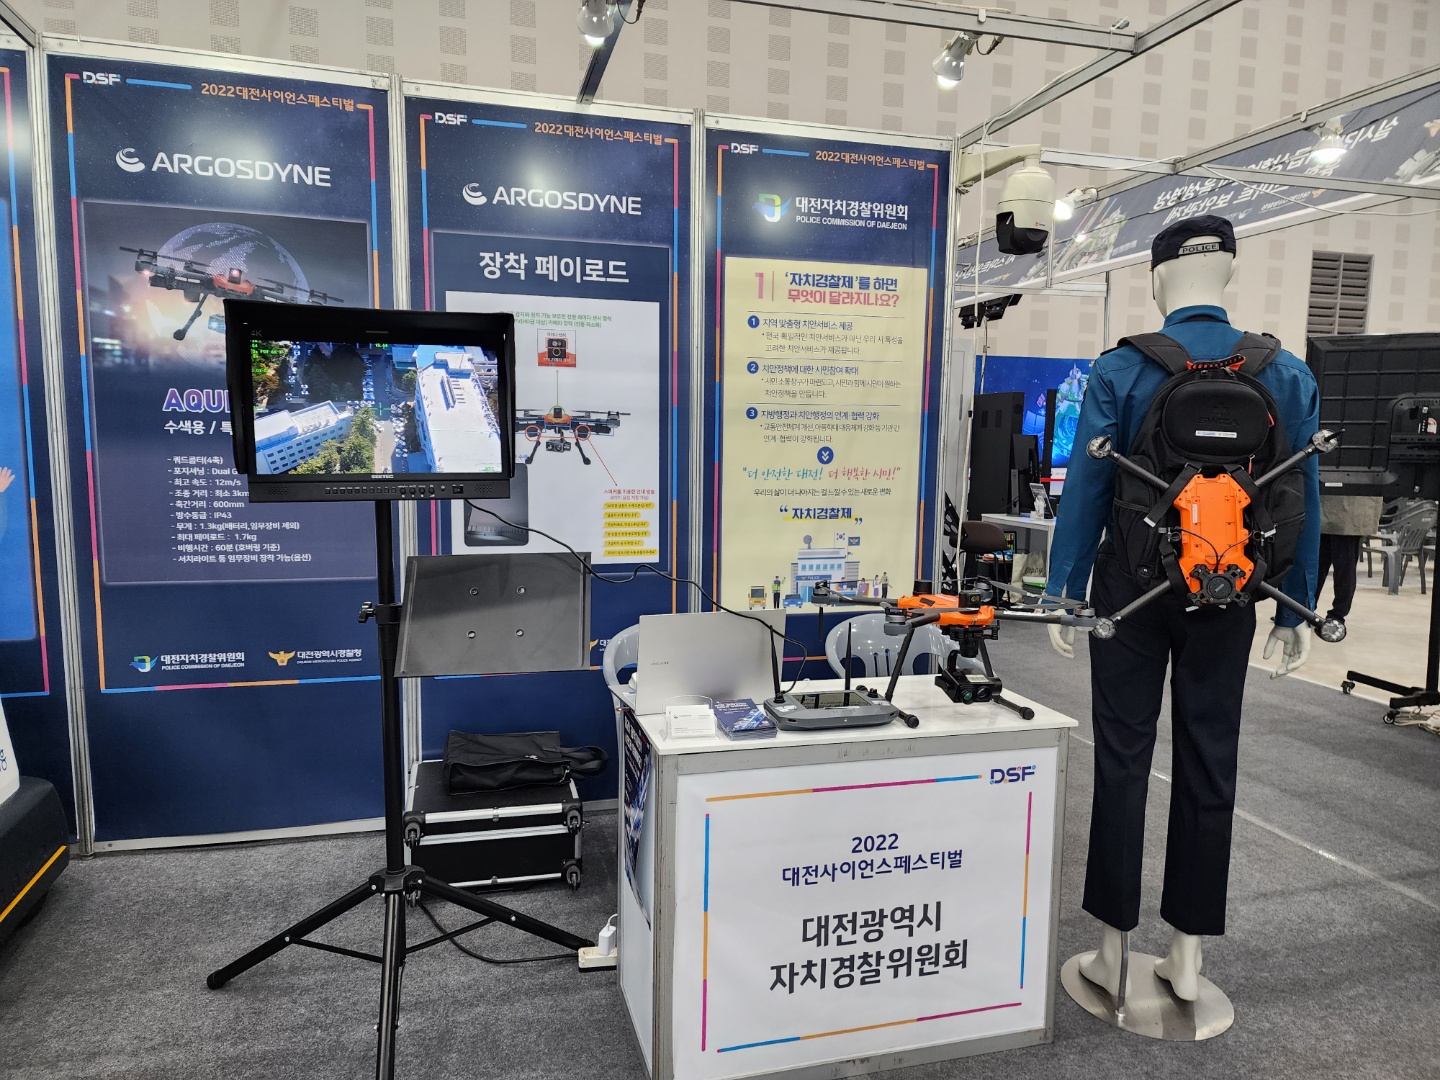 >ARGOSDYNE, Participates in Science Festival with Daejeon Autonomous Police Committee